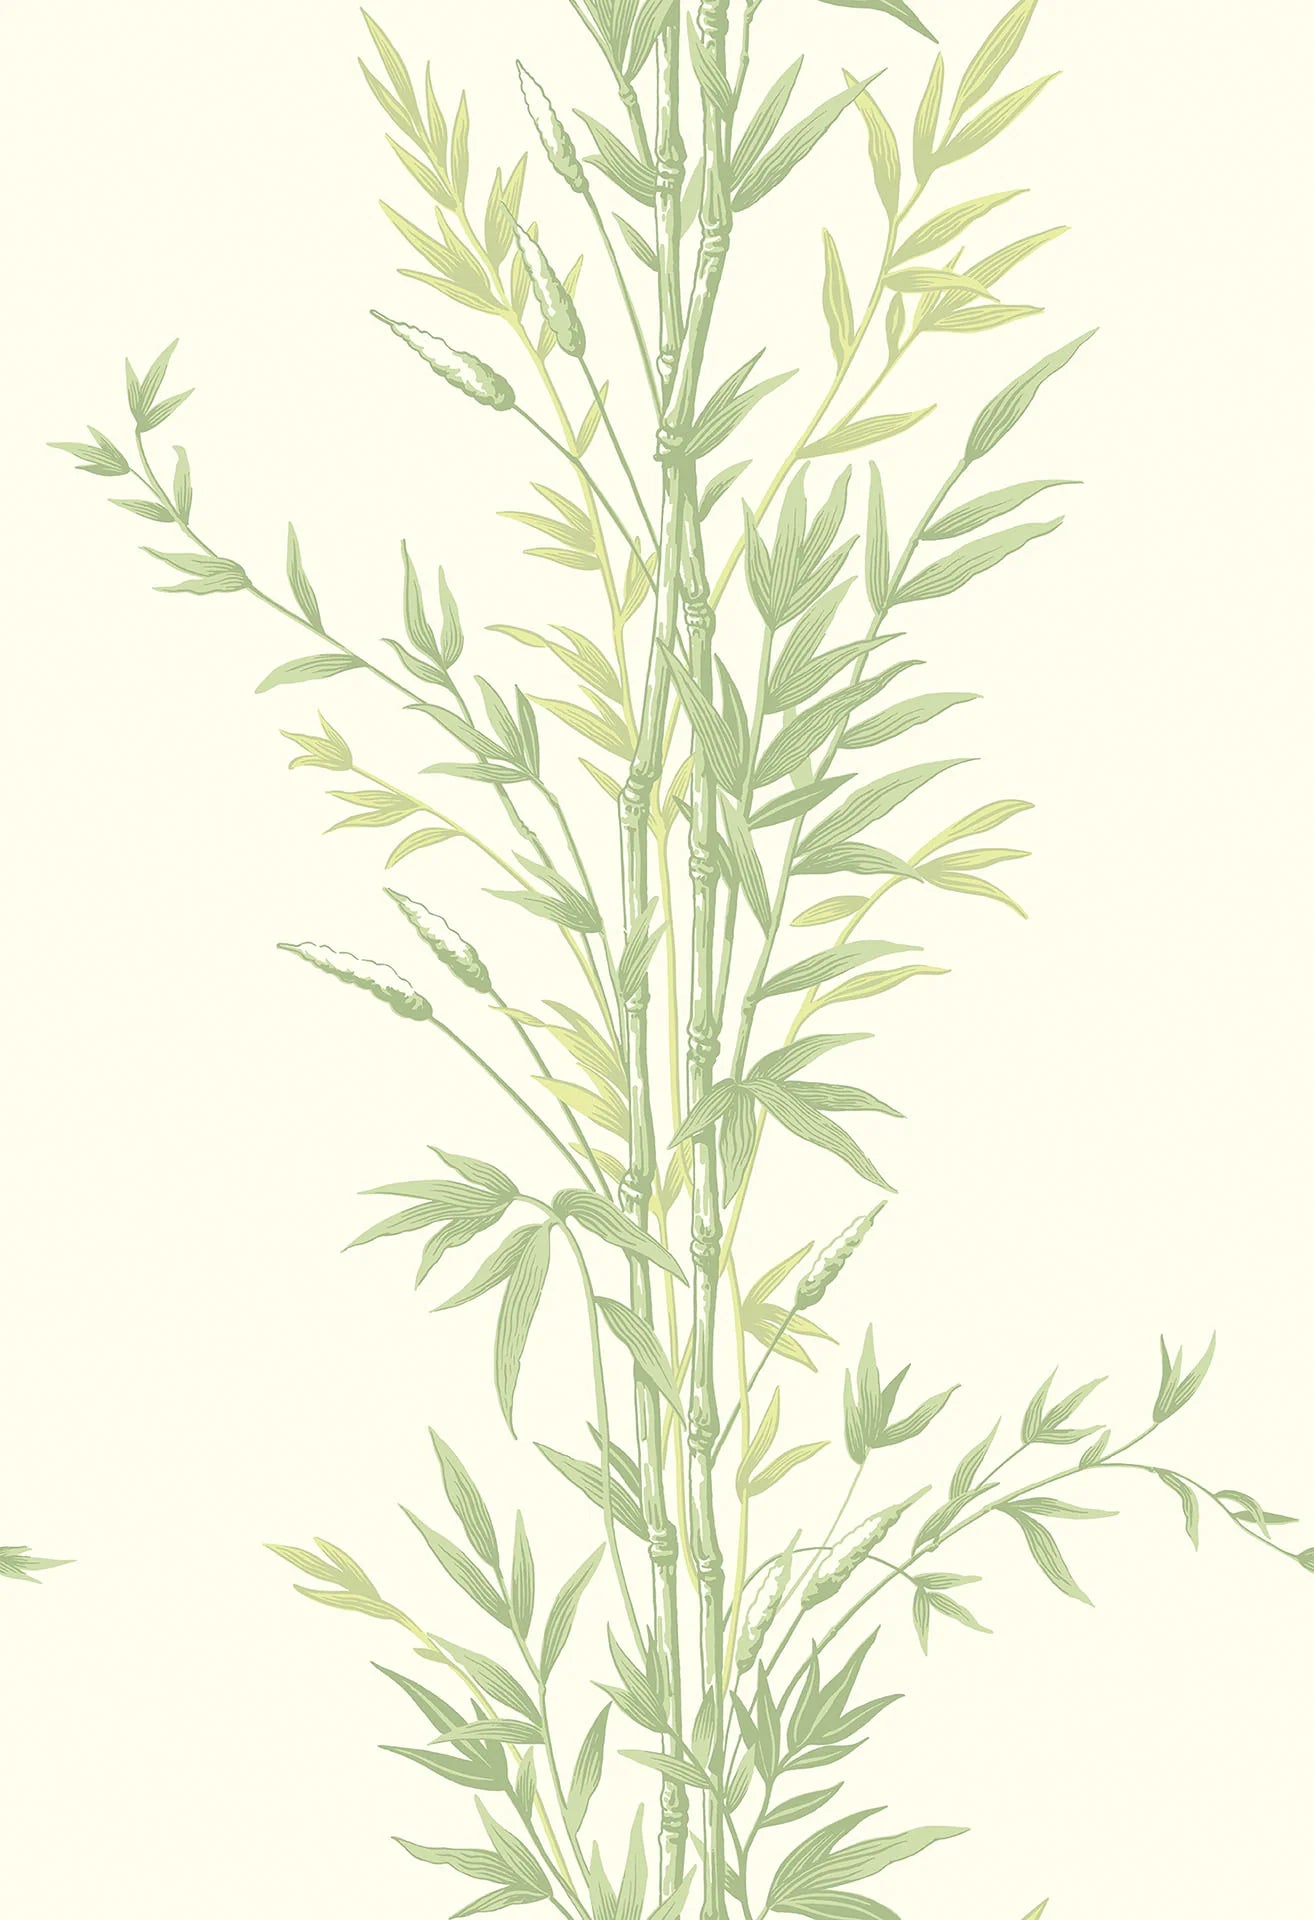 Tapeta ARCHIVE ANTHOLOGY - Bamboo zielony na bieli Cole & Son Default Title   Eye on Design